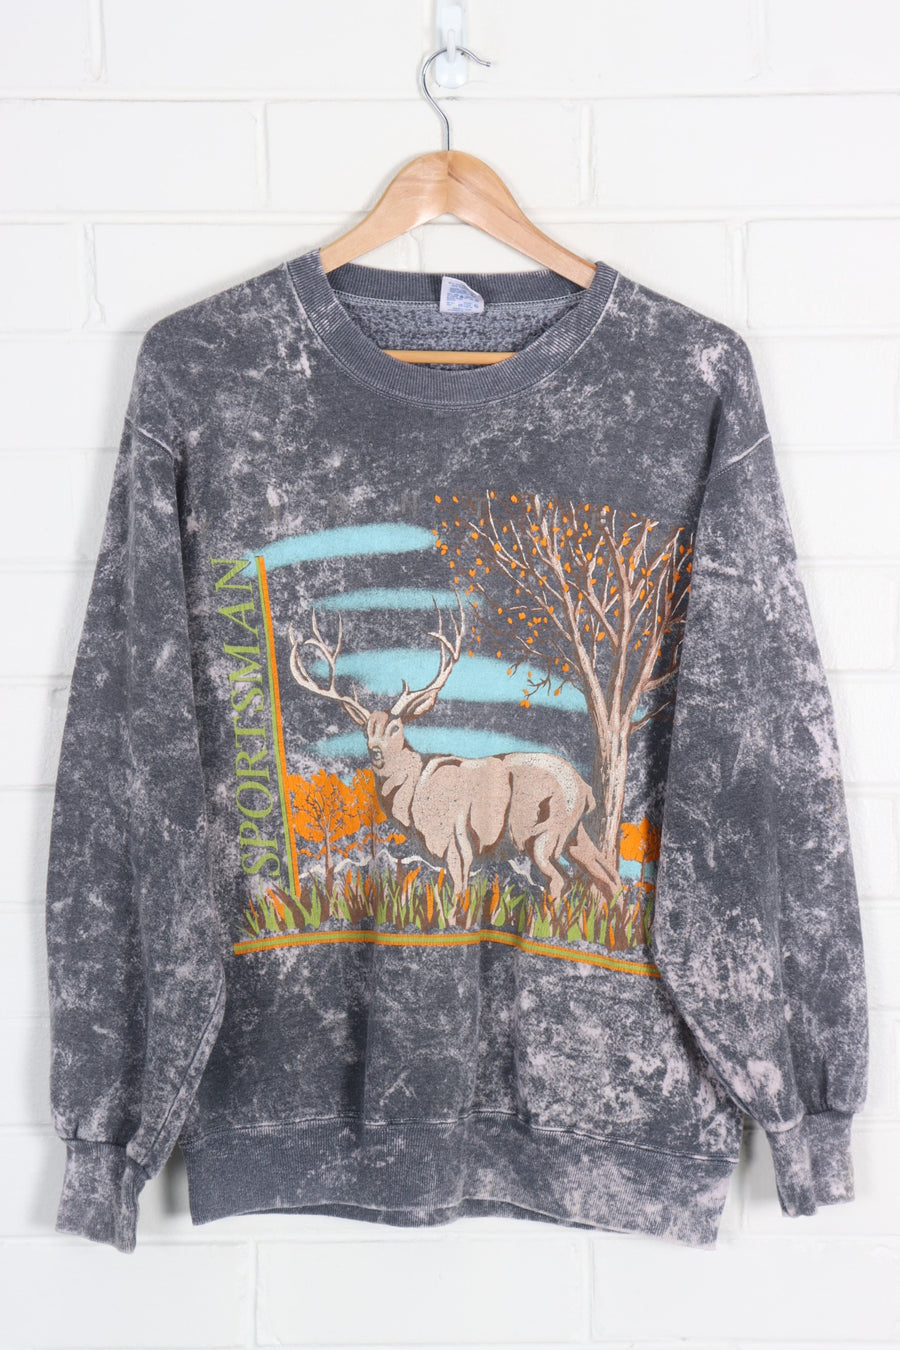 Deer & Nature Sportsman Colourful Tie-Dye Washed Sweatshirt (L-XL)